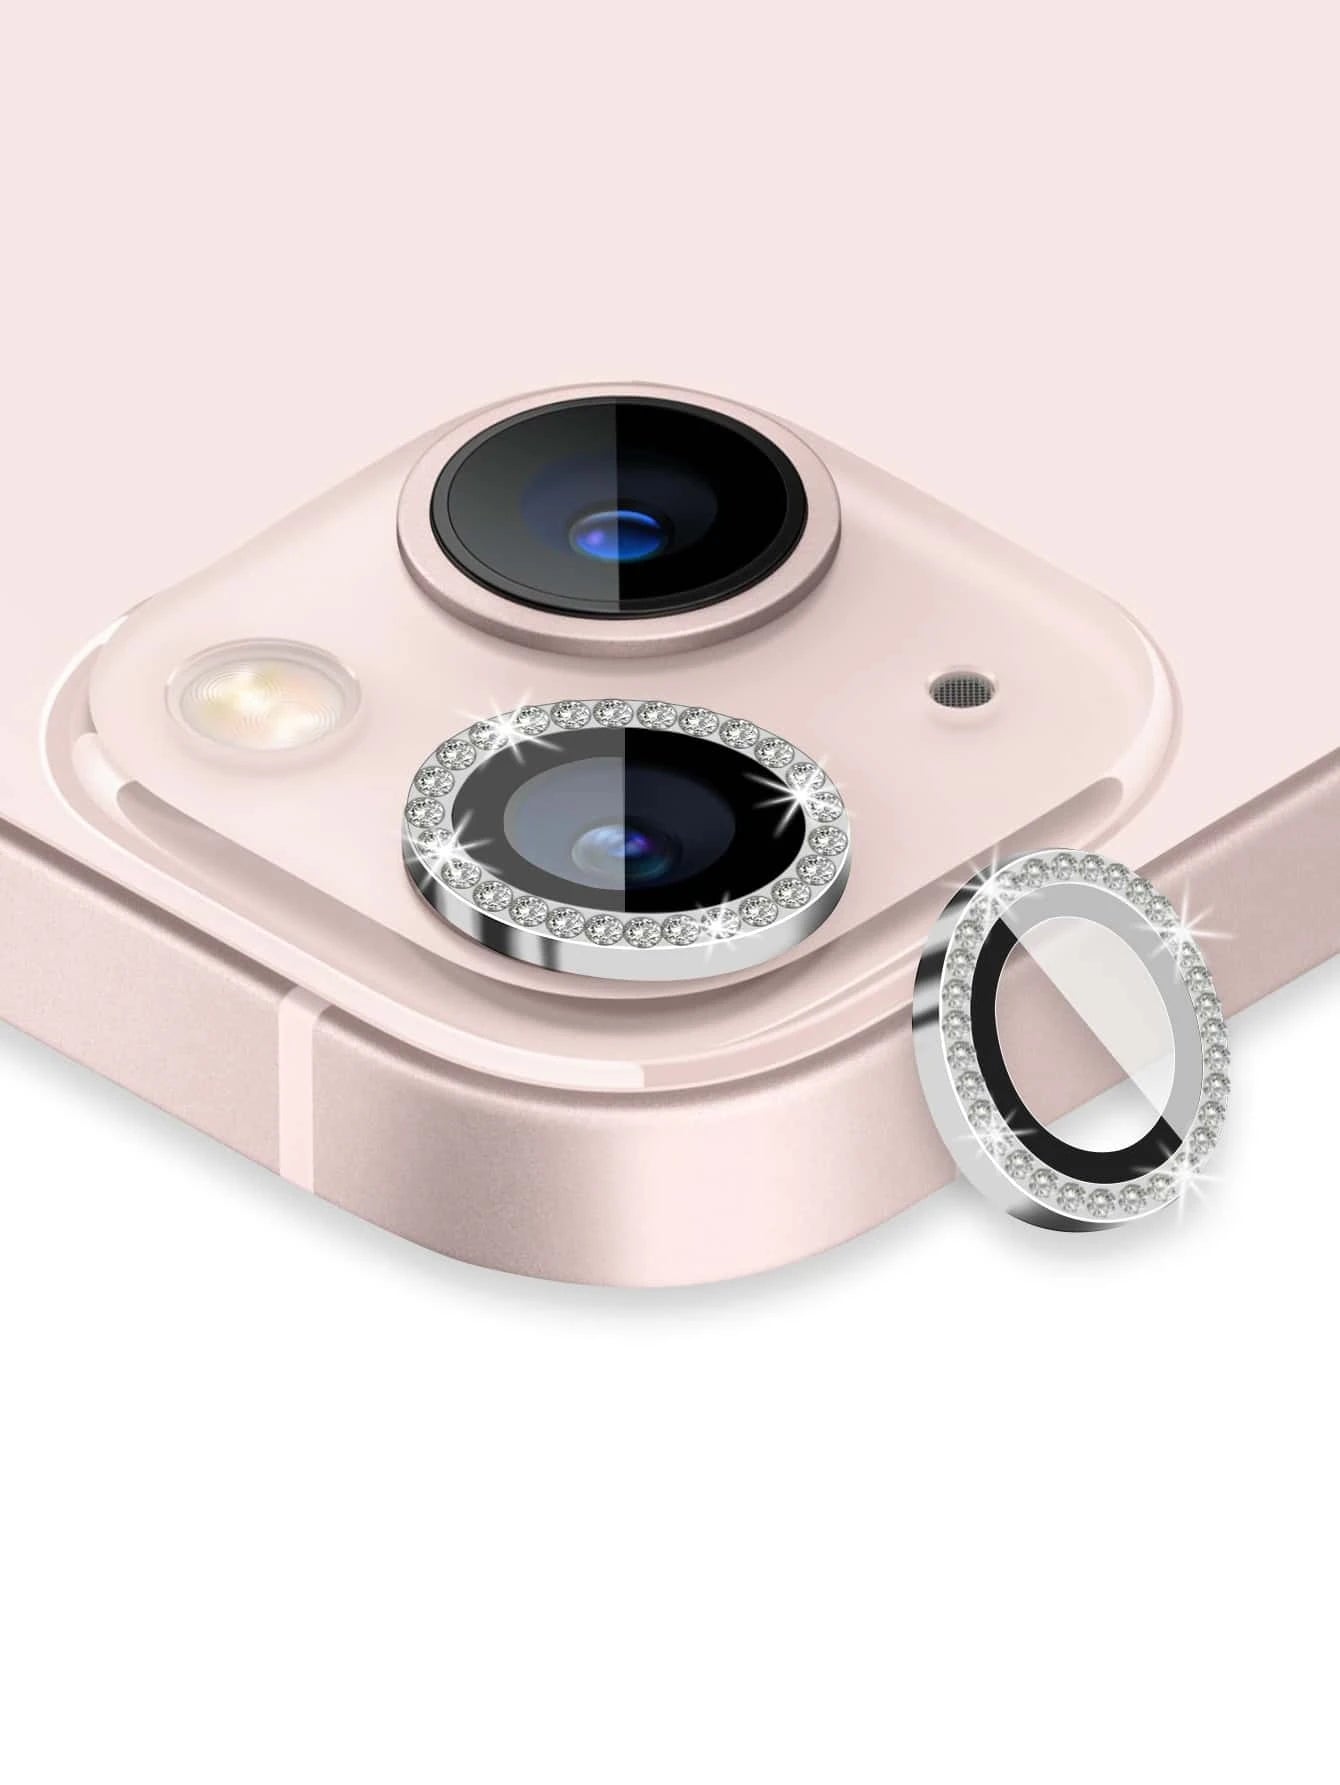 5526 a08-10 Dos piezas Protector de lentes con diseño de diamante de imitación ojo de águila cámara compatible con iPhone